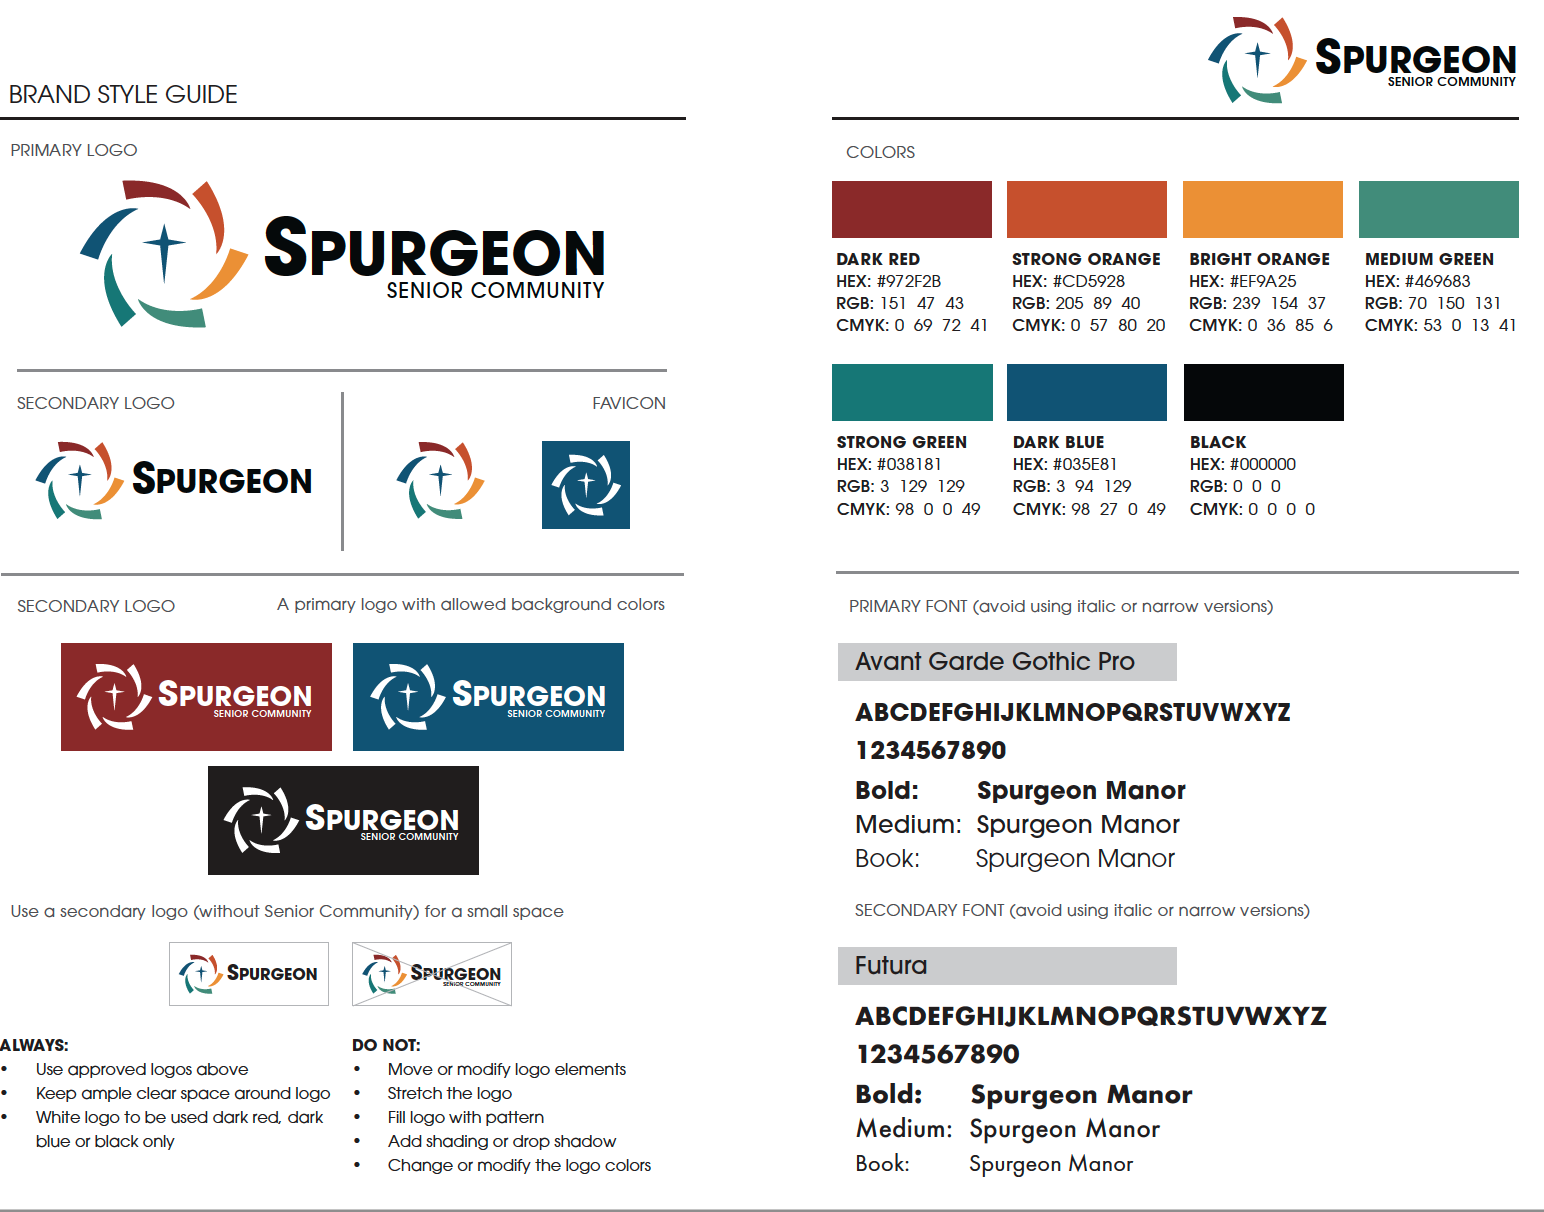 Branding Guide for Spurgeon Manor.